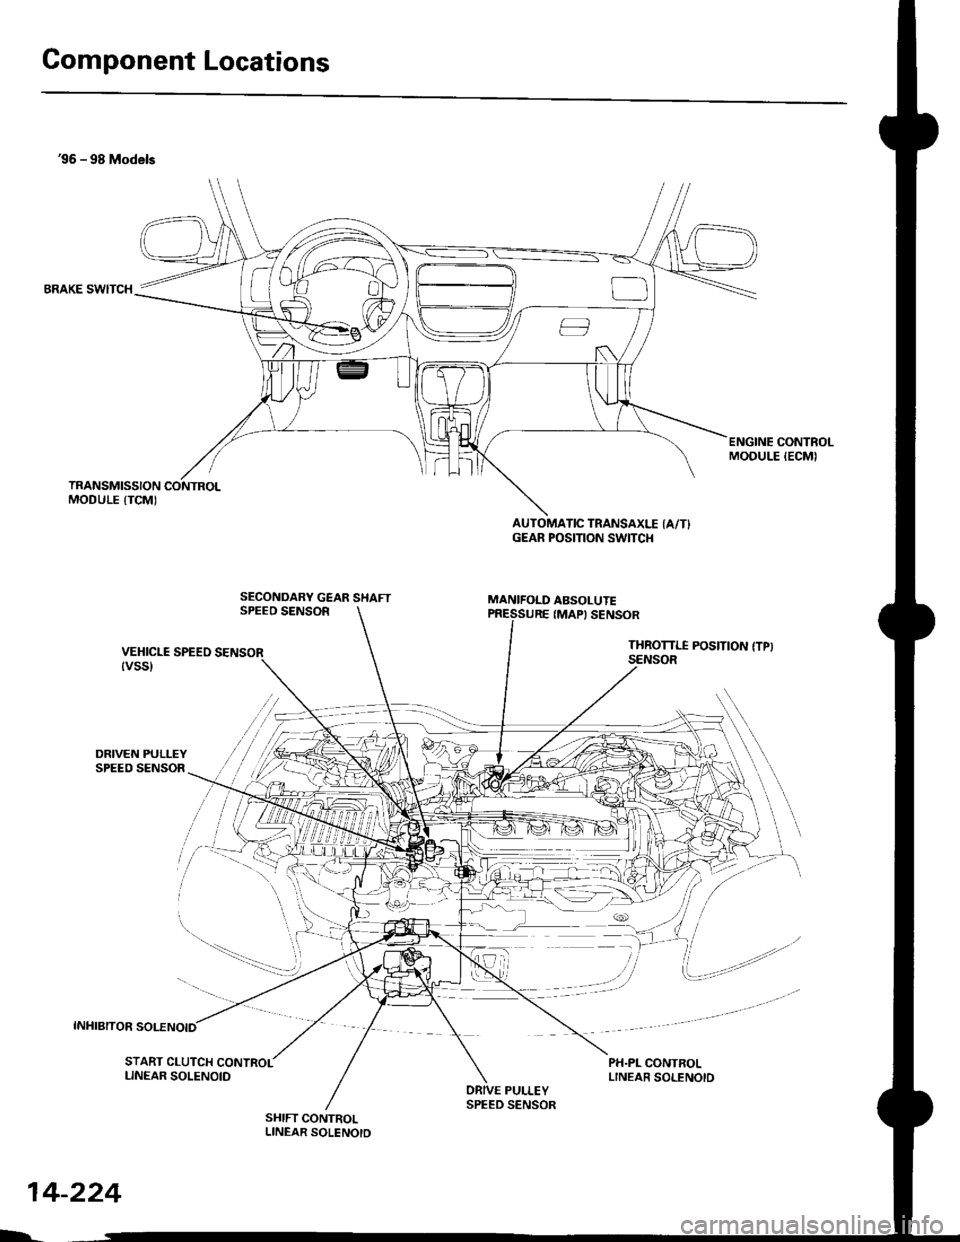 HONDA CIVIC 2000 6.G Workshop Manual Component Locations
36 - 98 Models
BRAKE SWITCH
DRIVEN PULLEYSPEED SENSOR
INHIBITOR SOLENOID
ENGINE CONTROLMODULE IECMI
SECONDARY GEAR SHAFTSPEEO SENSOR
AUTOMATIC TRANSAXLE (A/T}GEAR POSITION SWITCI{
